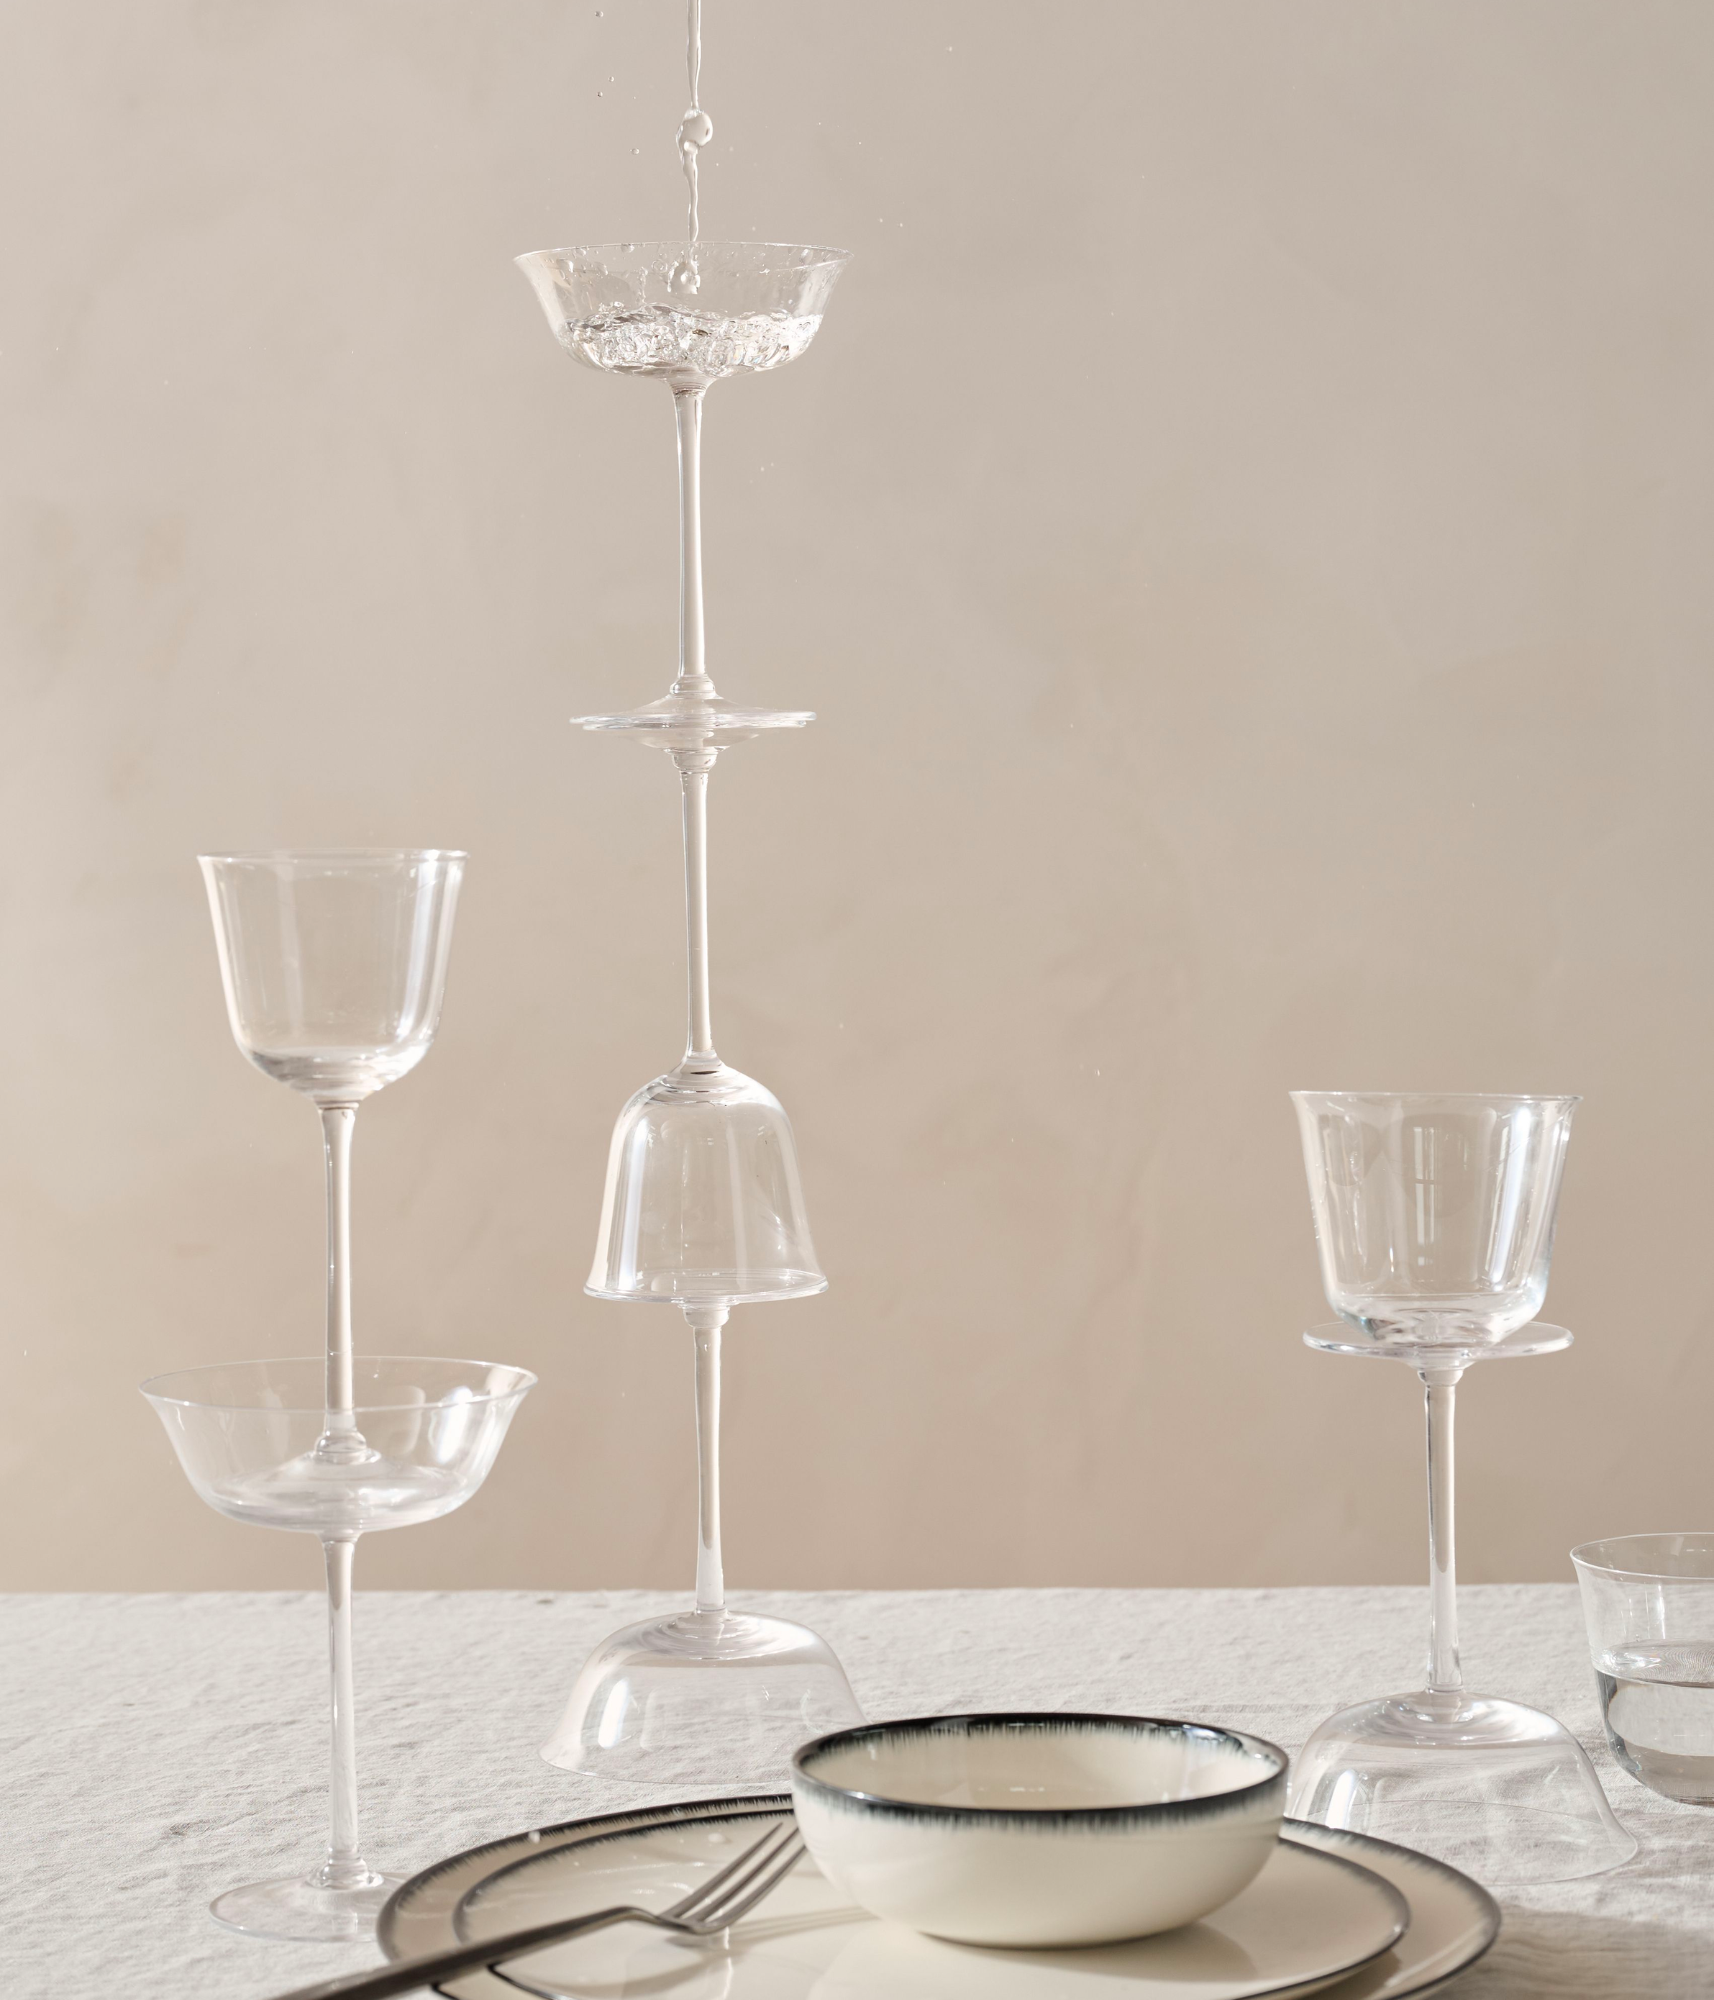 Elegant Crystal Straight Edge Design - Set of 4 Wine Glasses